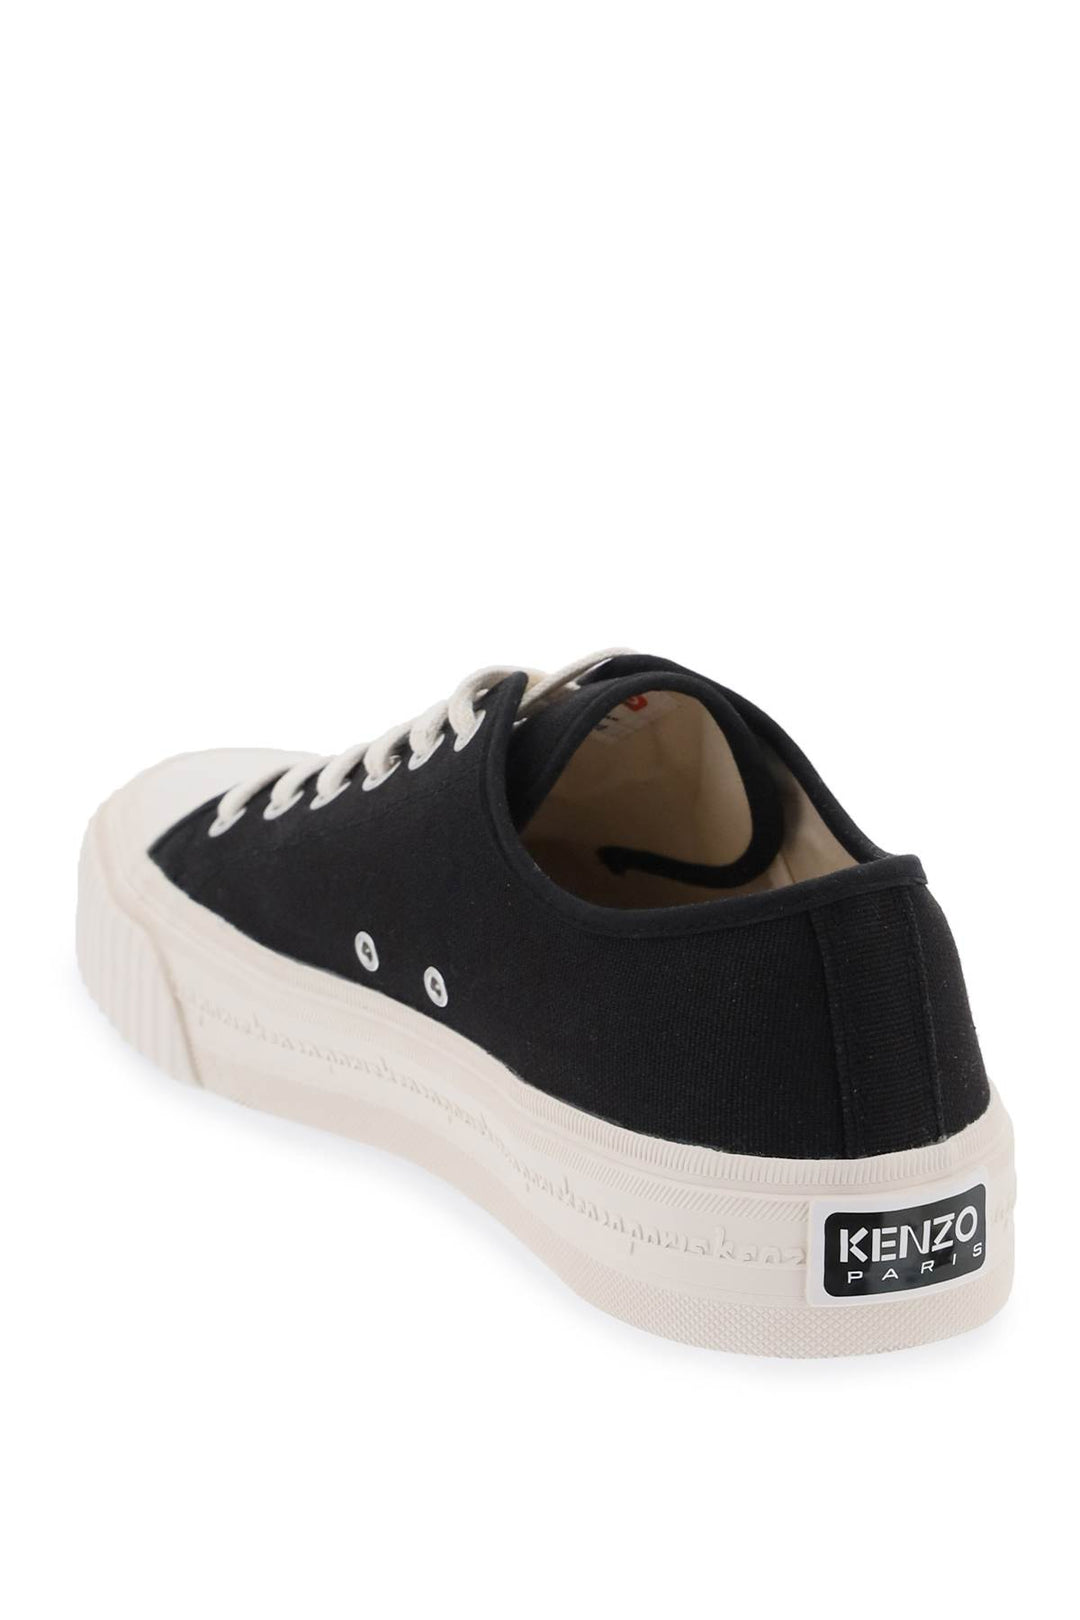 Kenzo Foxy Sneakers   Nero